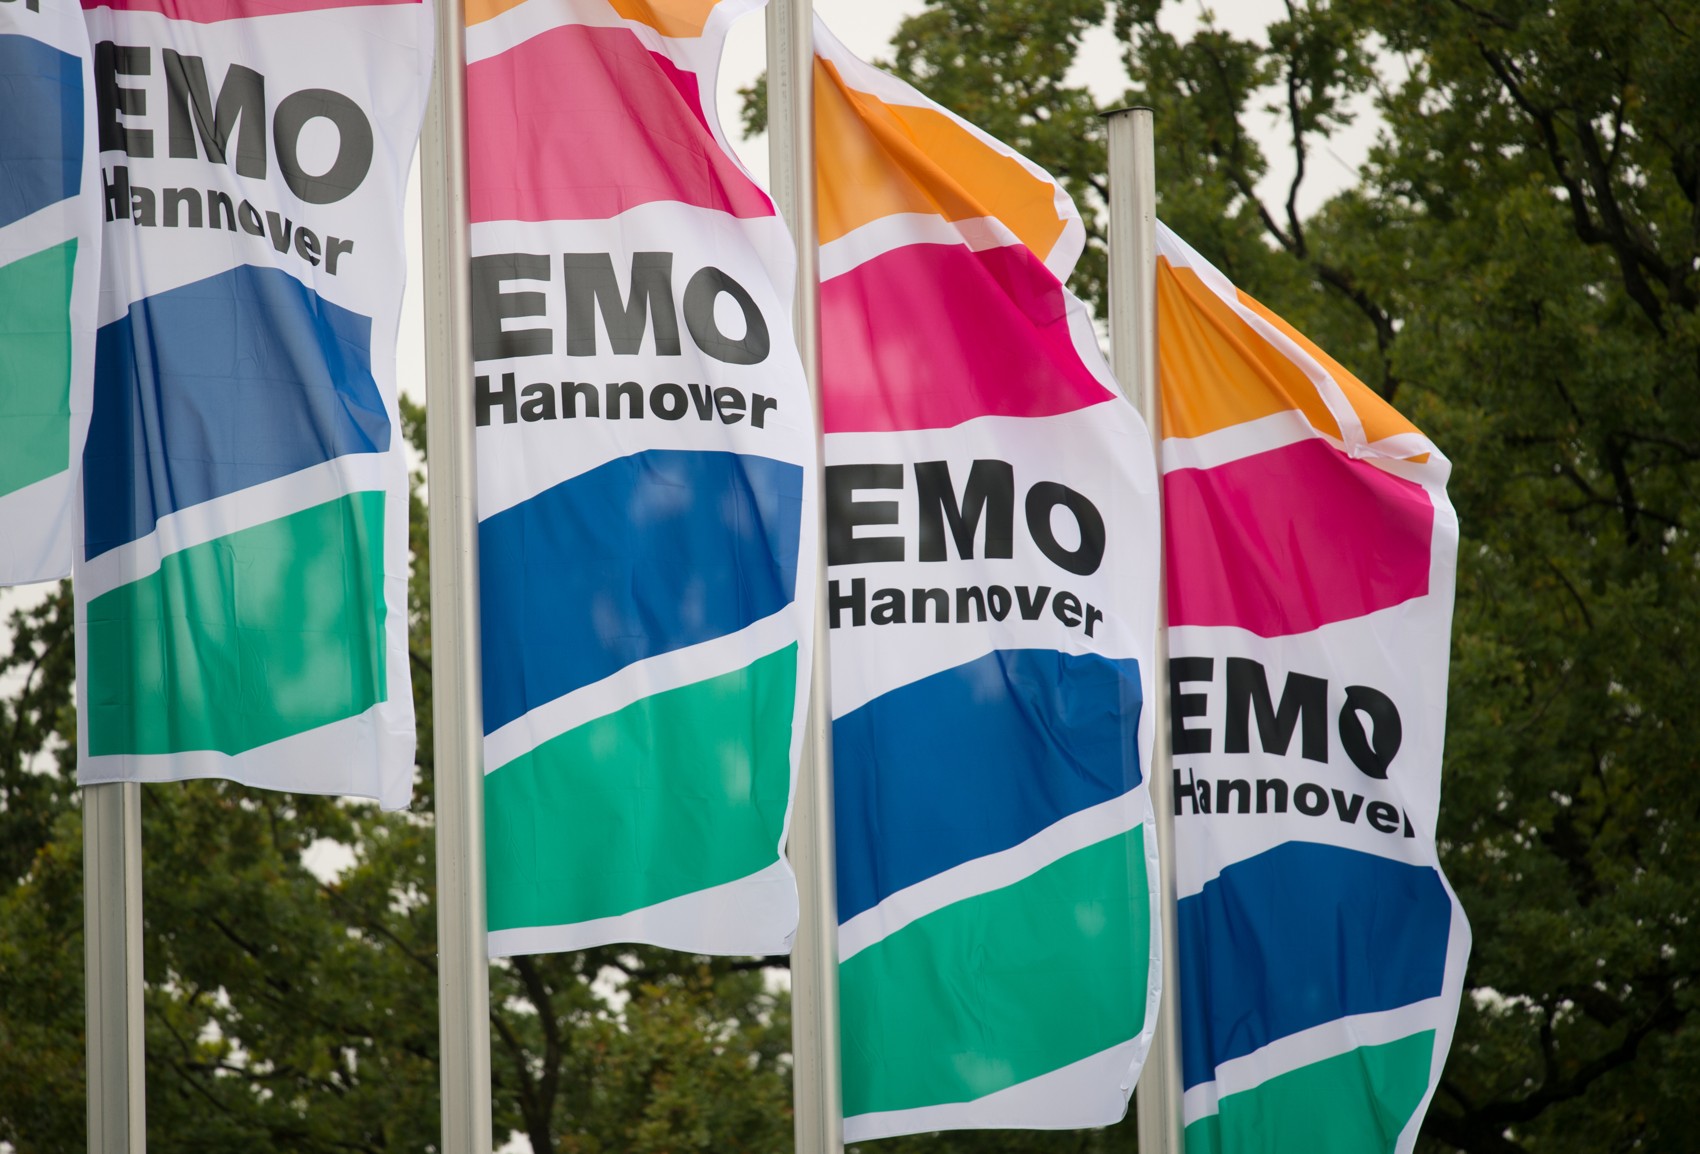 EMO Hannover flags. Photo via EMO.